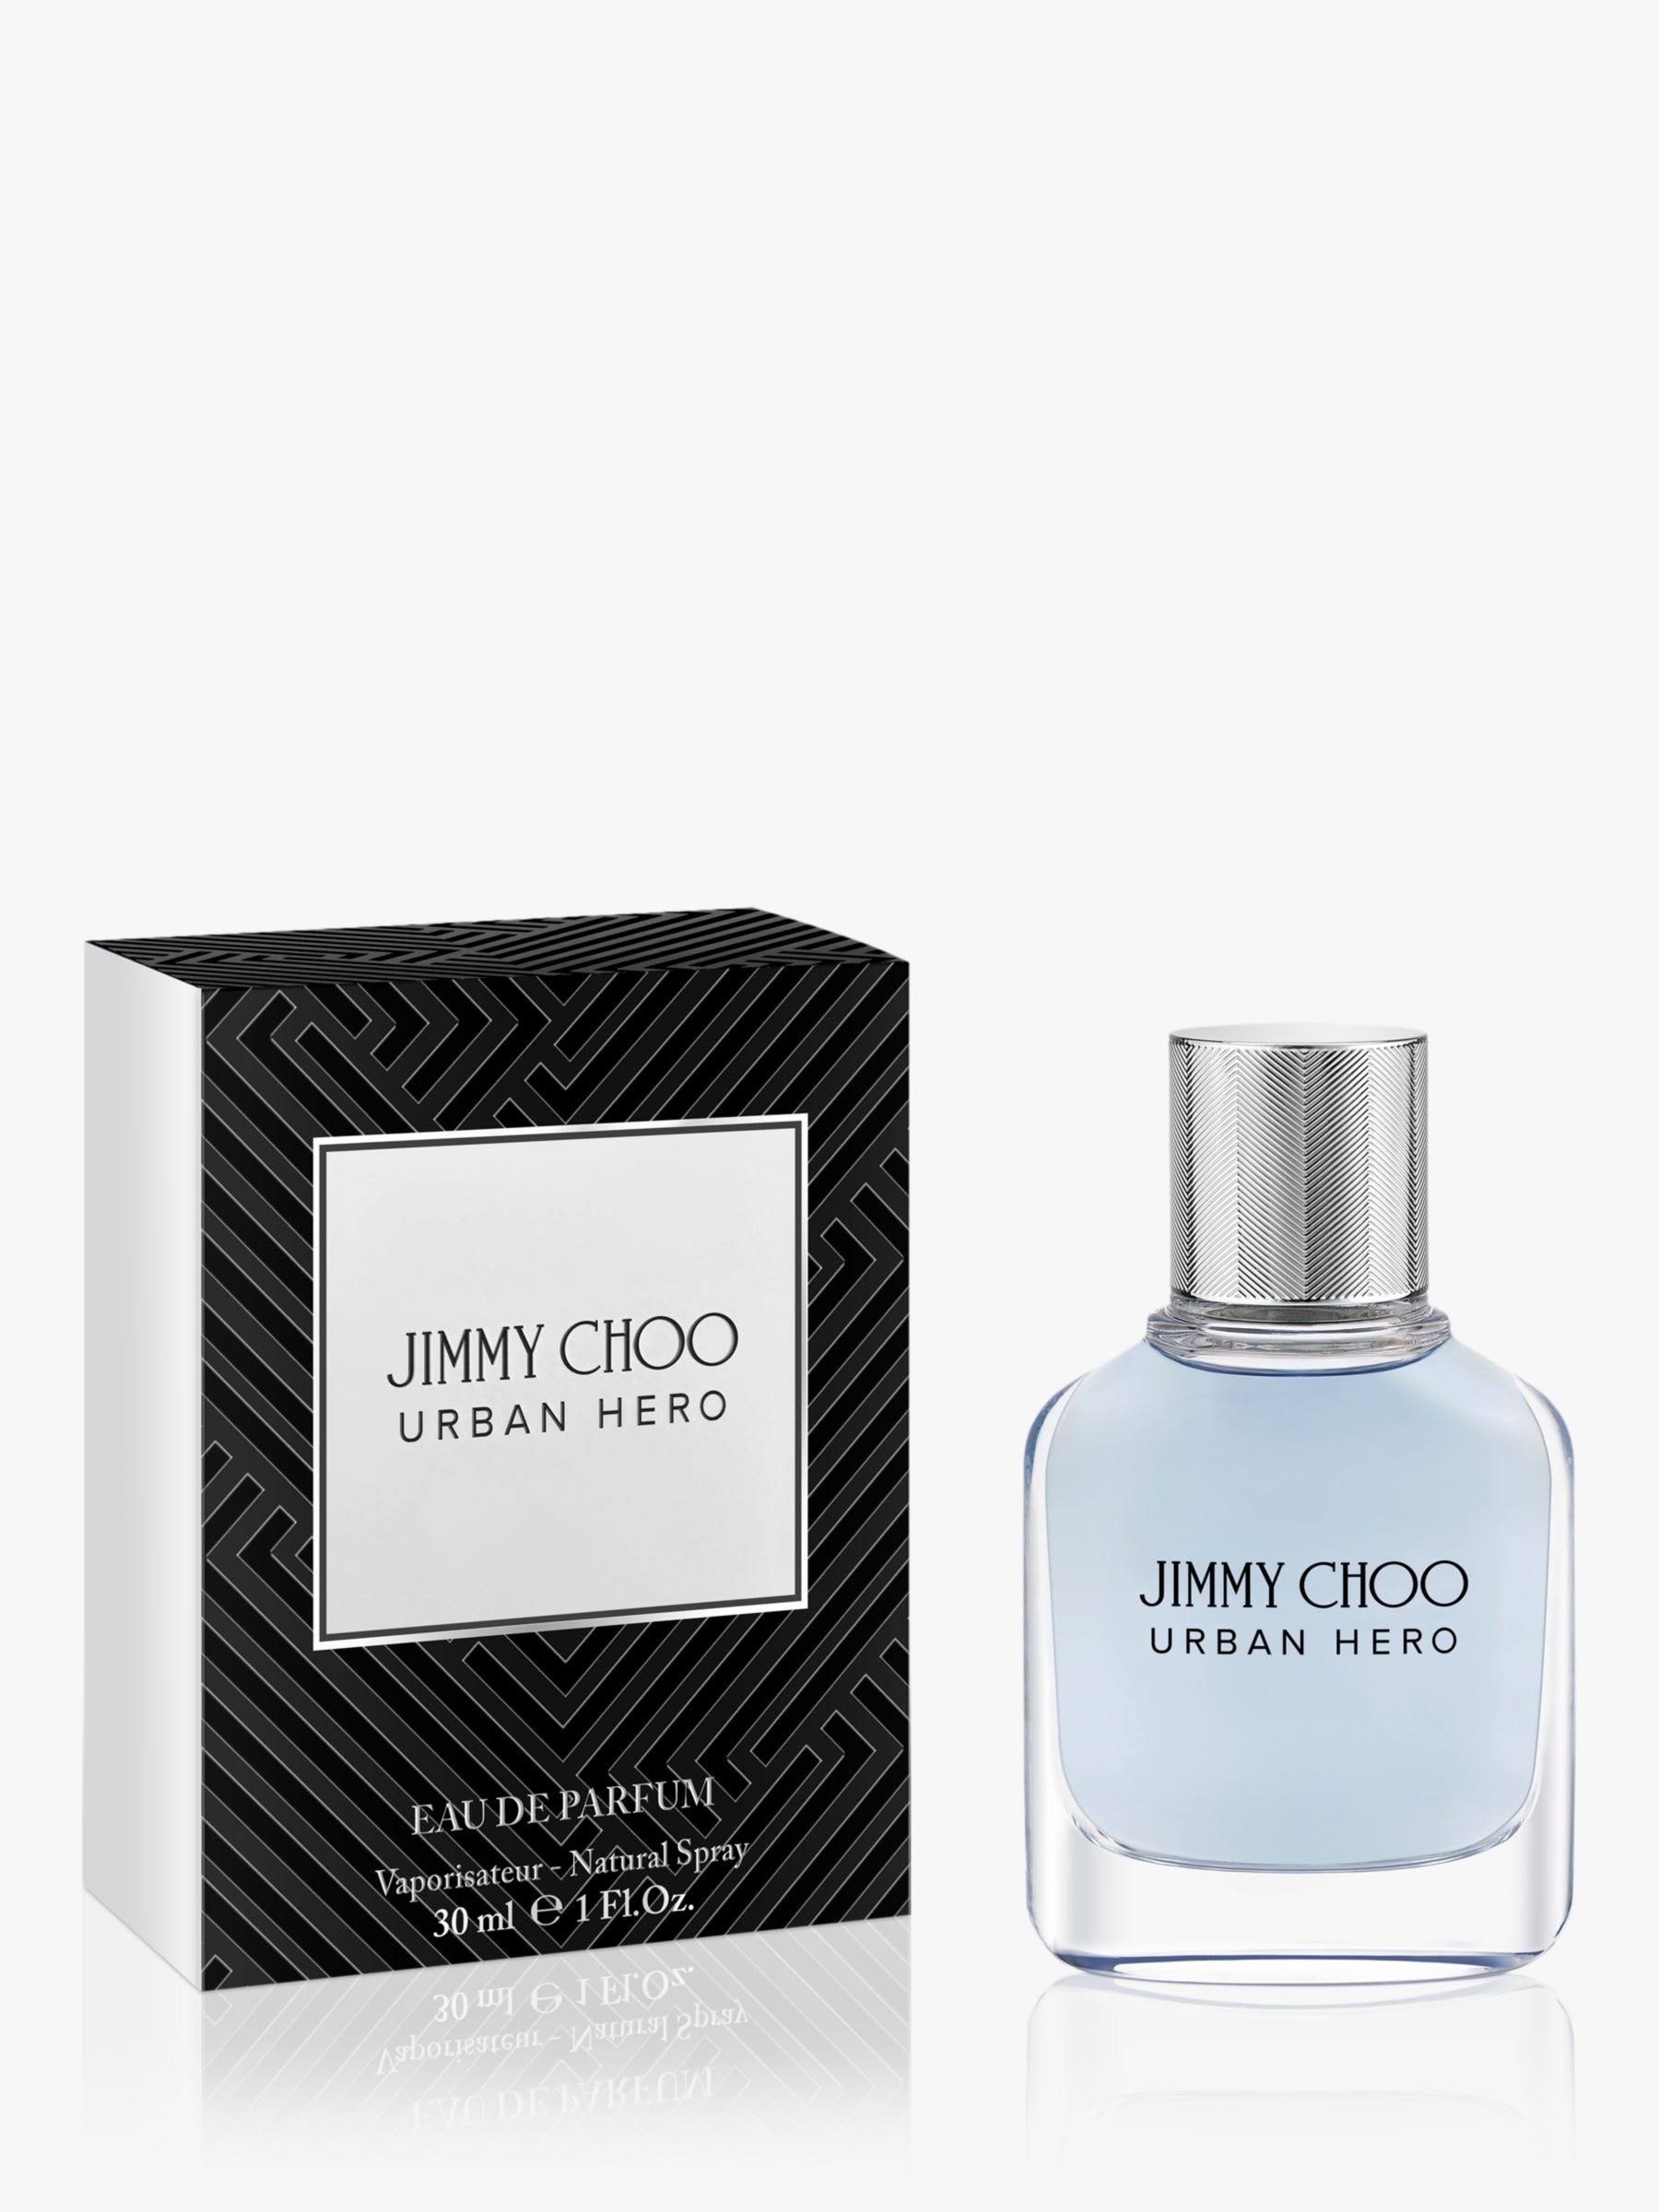 Jimmy Choo Urban Hero Perfume Spray - 30ml